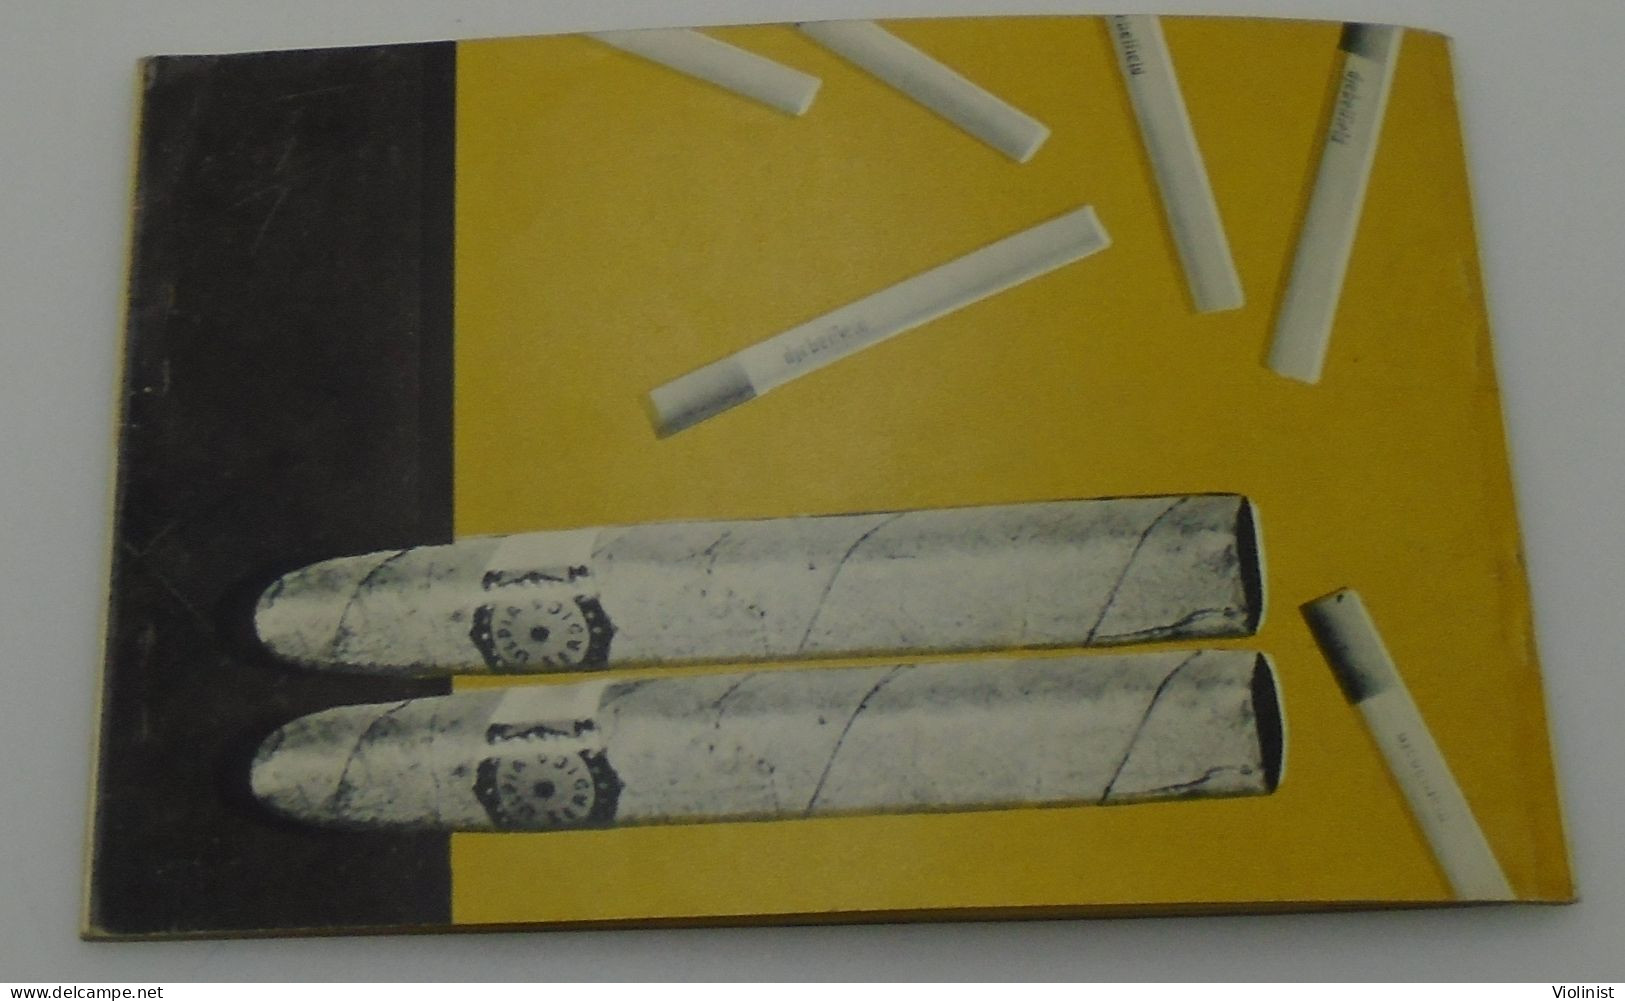 Old brochure of Bulgarian cigarettes